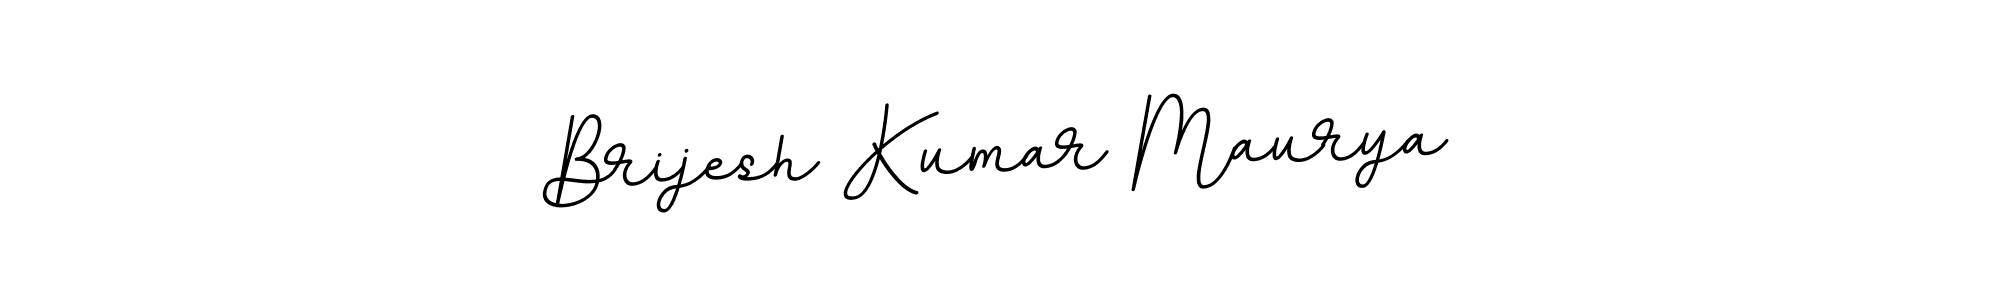 How to Draw Brijesh Kumar Maurya signature style? BallpointsItalic-DORy9 is a latest design signature styles for name Brijesh Kumar Maurya. Brijesh Kumar Maurya signature style 11 images and pictures png